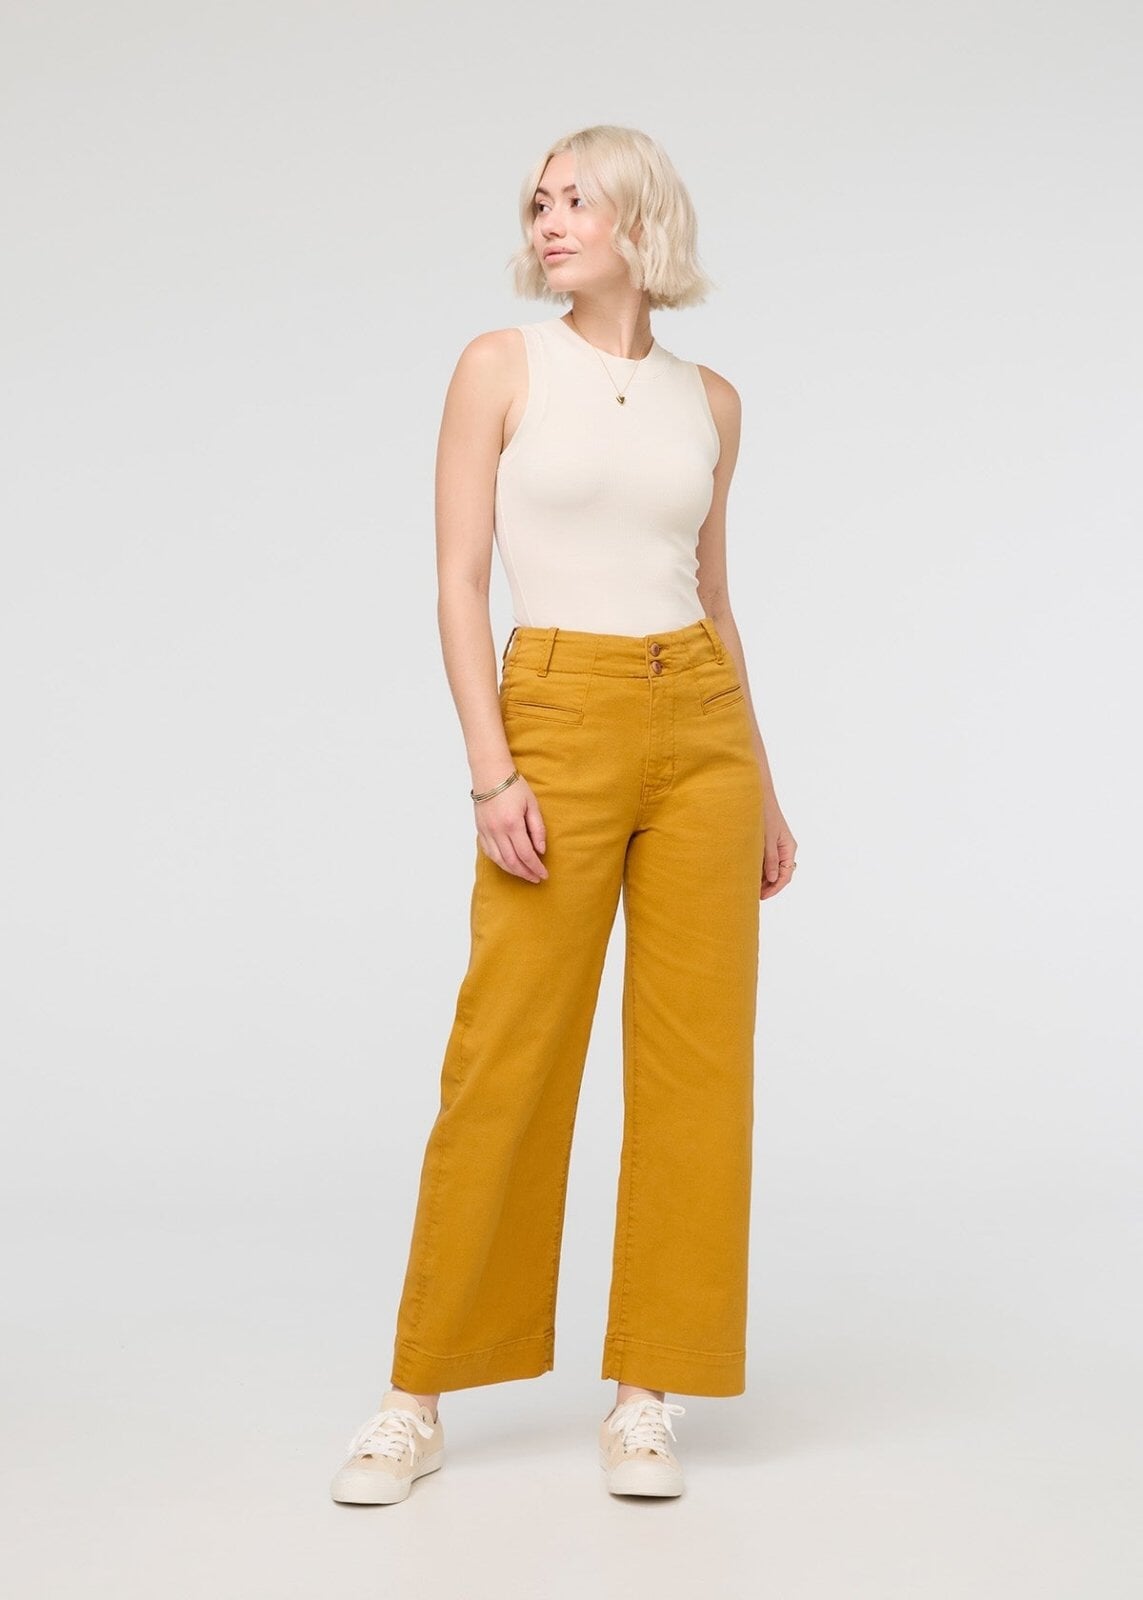 Women's Yellow High Rise Trouser